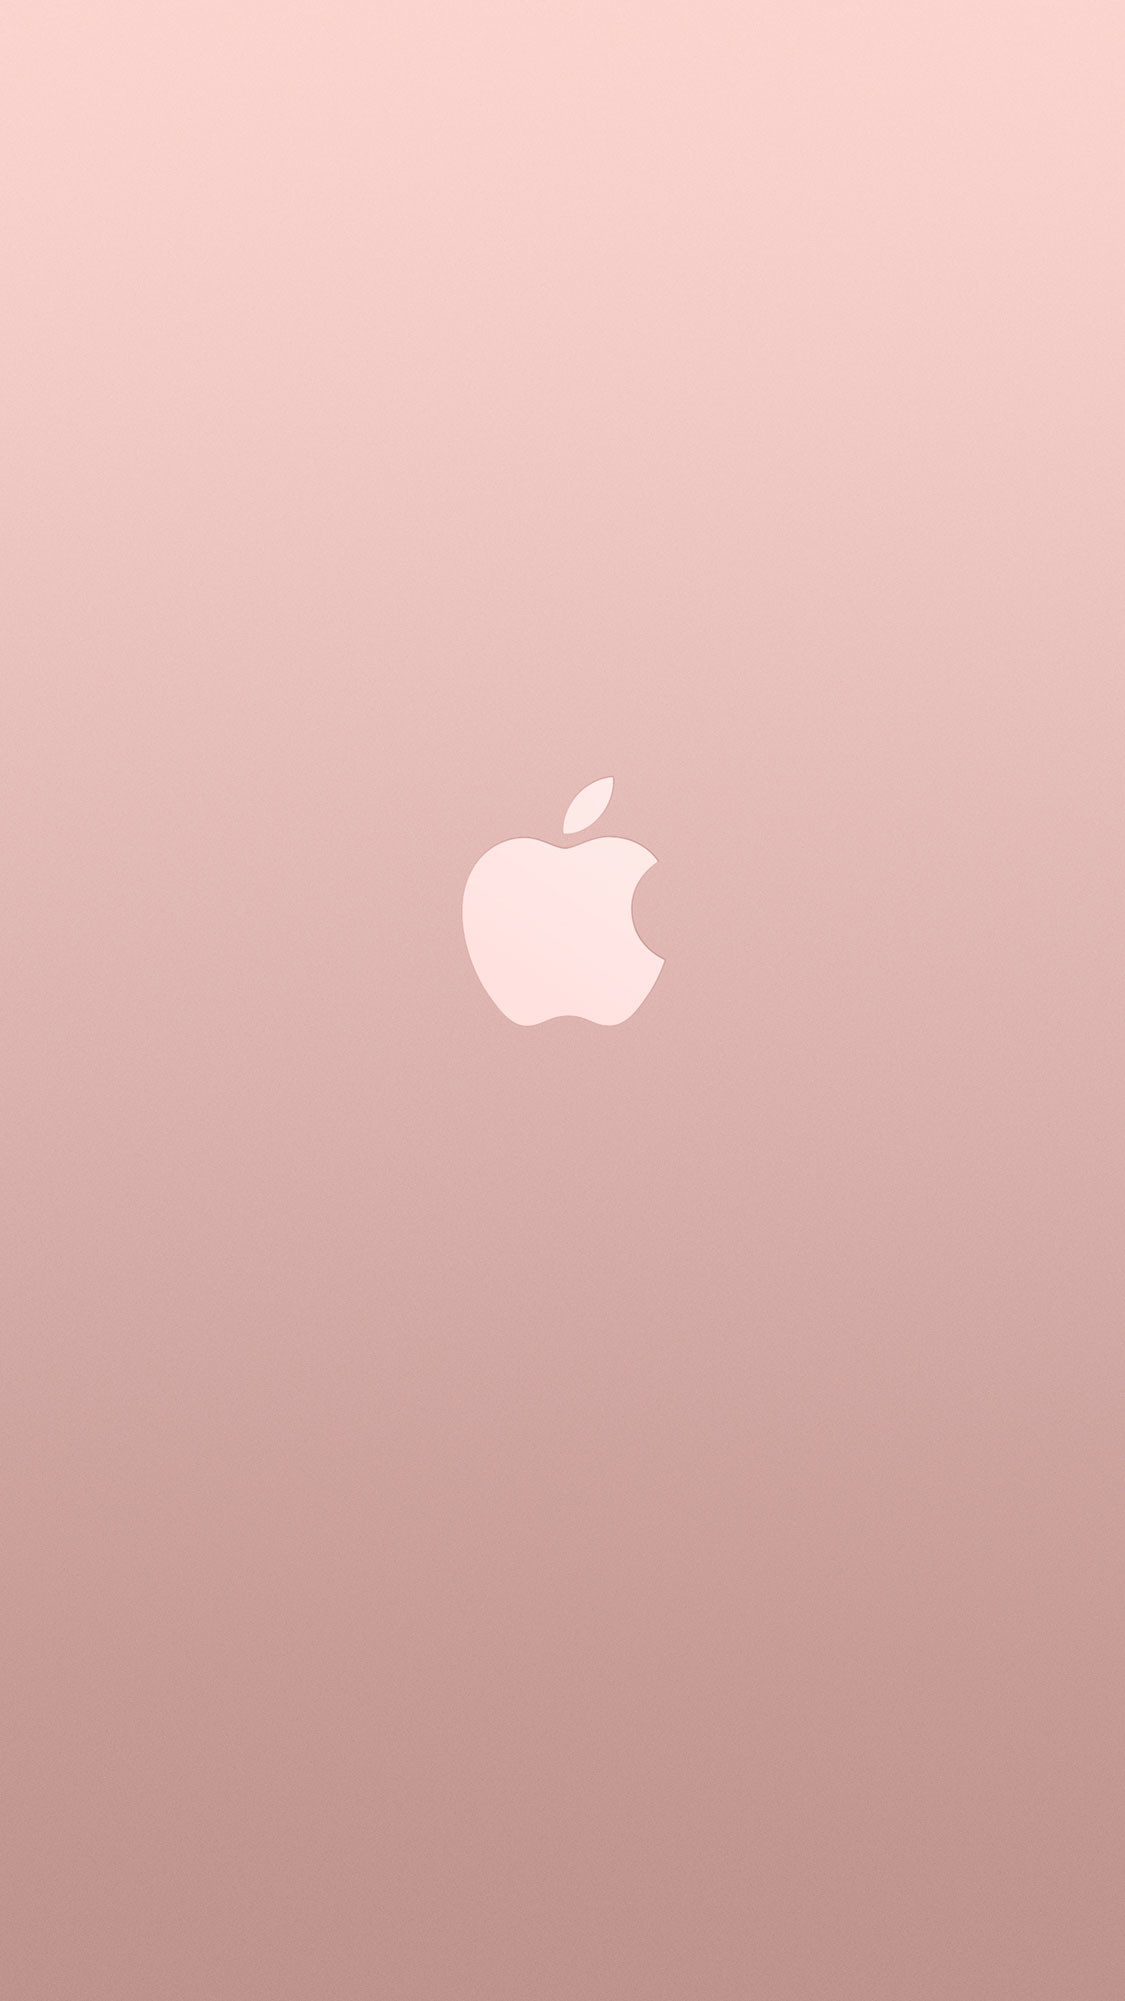 1125x2001 Rose-Gold-Apple-iPhone-6s-wallpaper-HD.jpg (